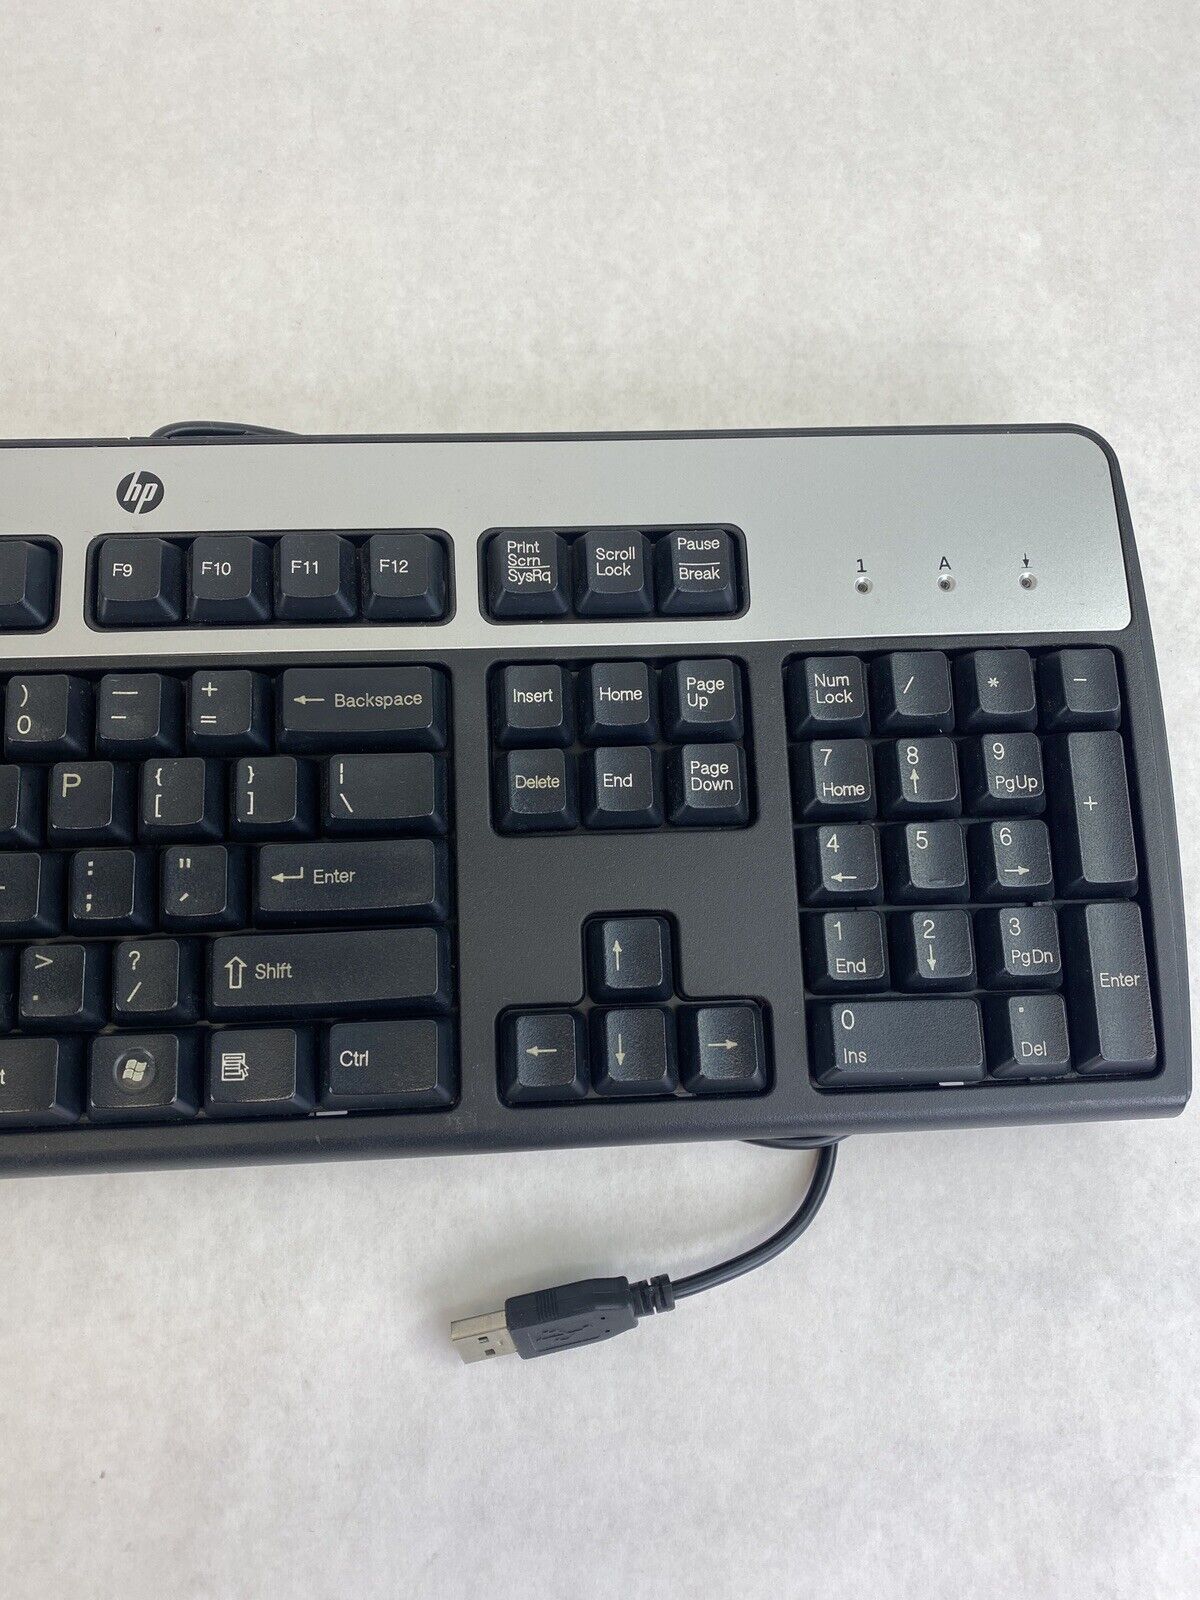 HP 434821-002 Model SK-2885 clicky keys keyboard to USB Lot of 5